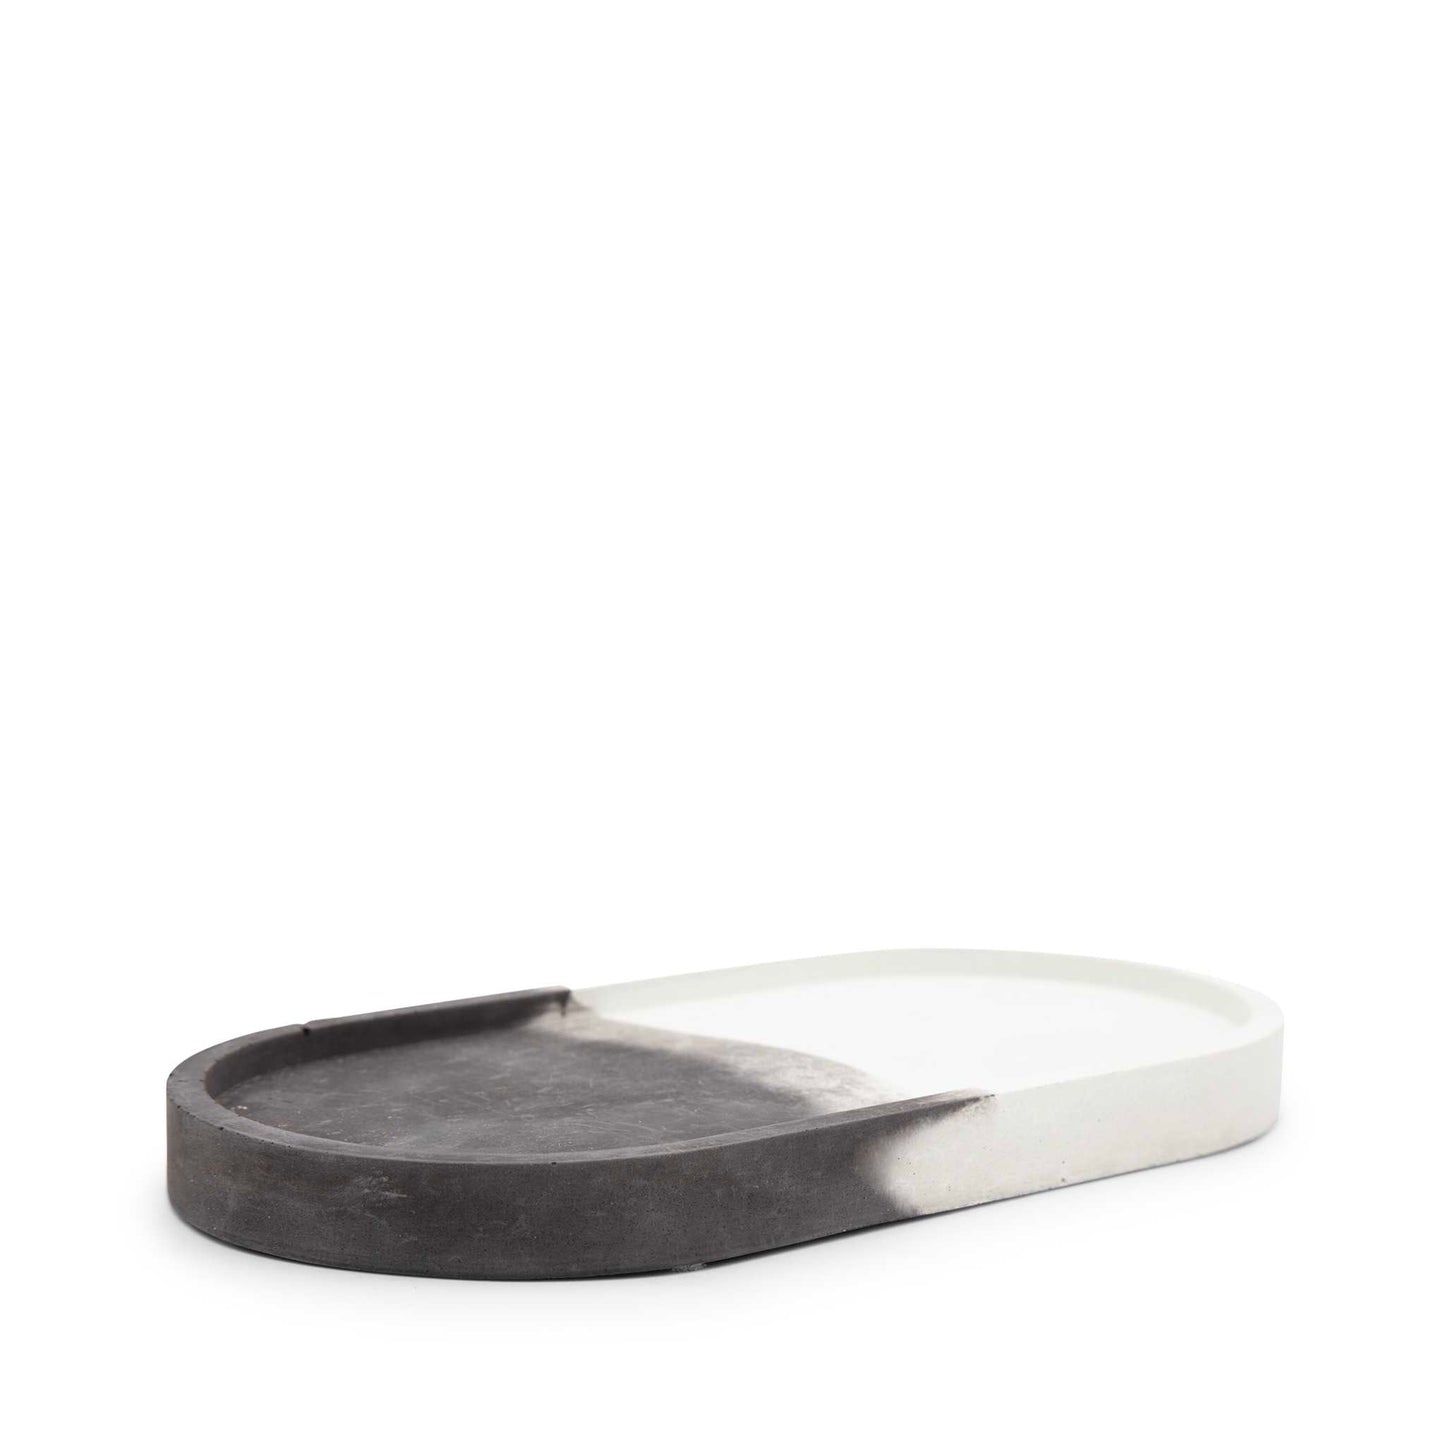 Faerly Homewares Concrete Oval Decorative Tray  - Two Tone Black & White